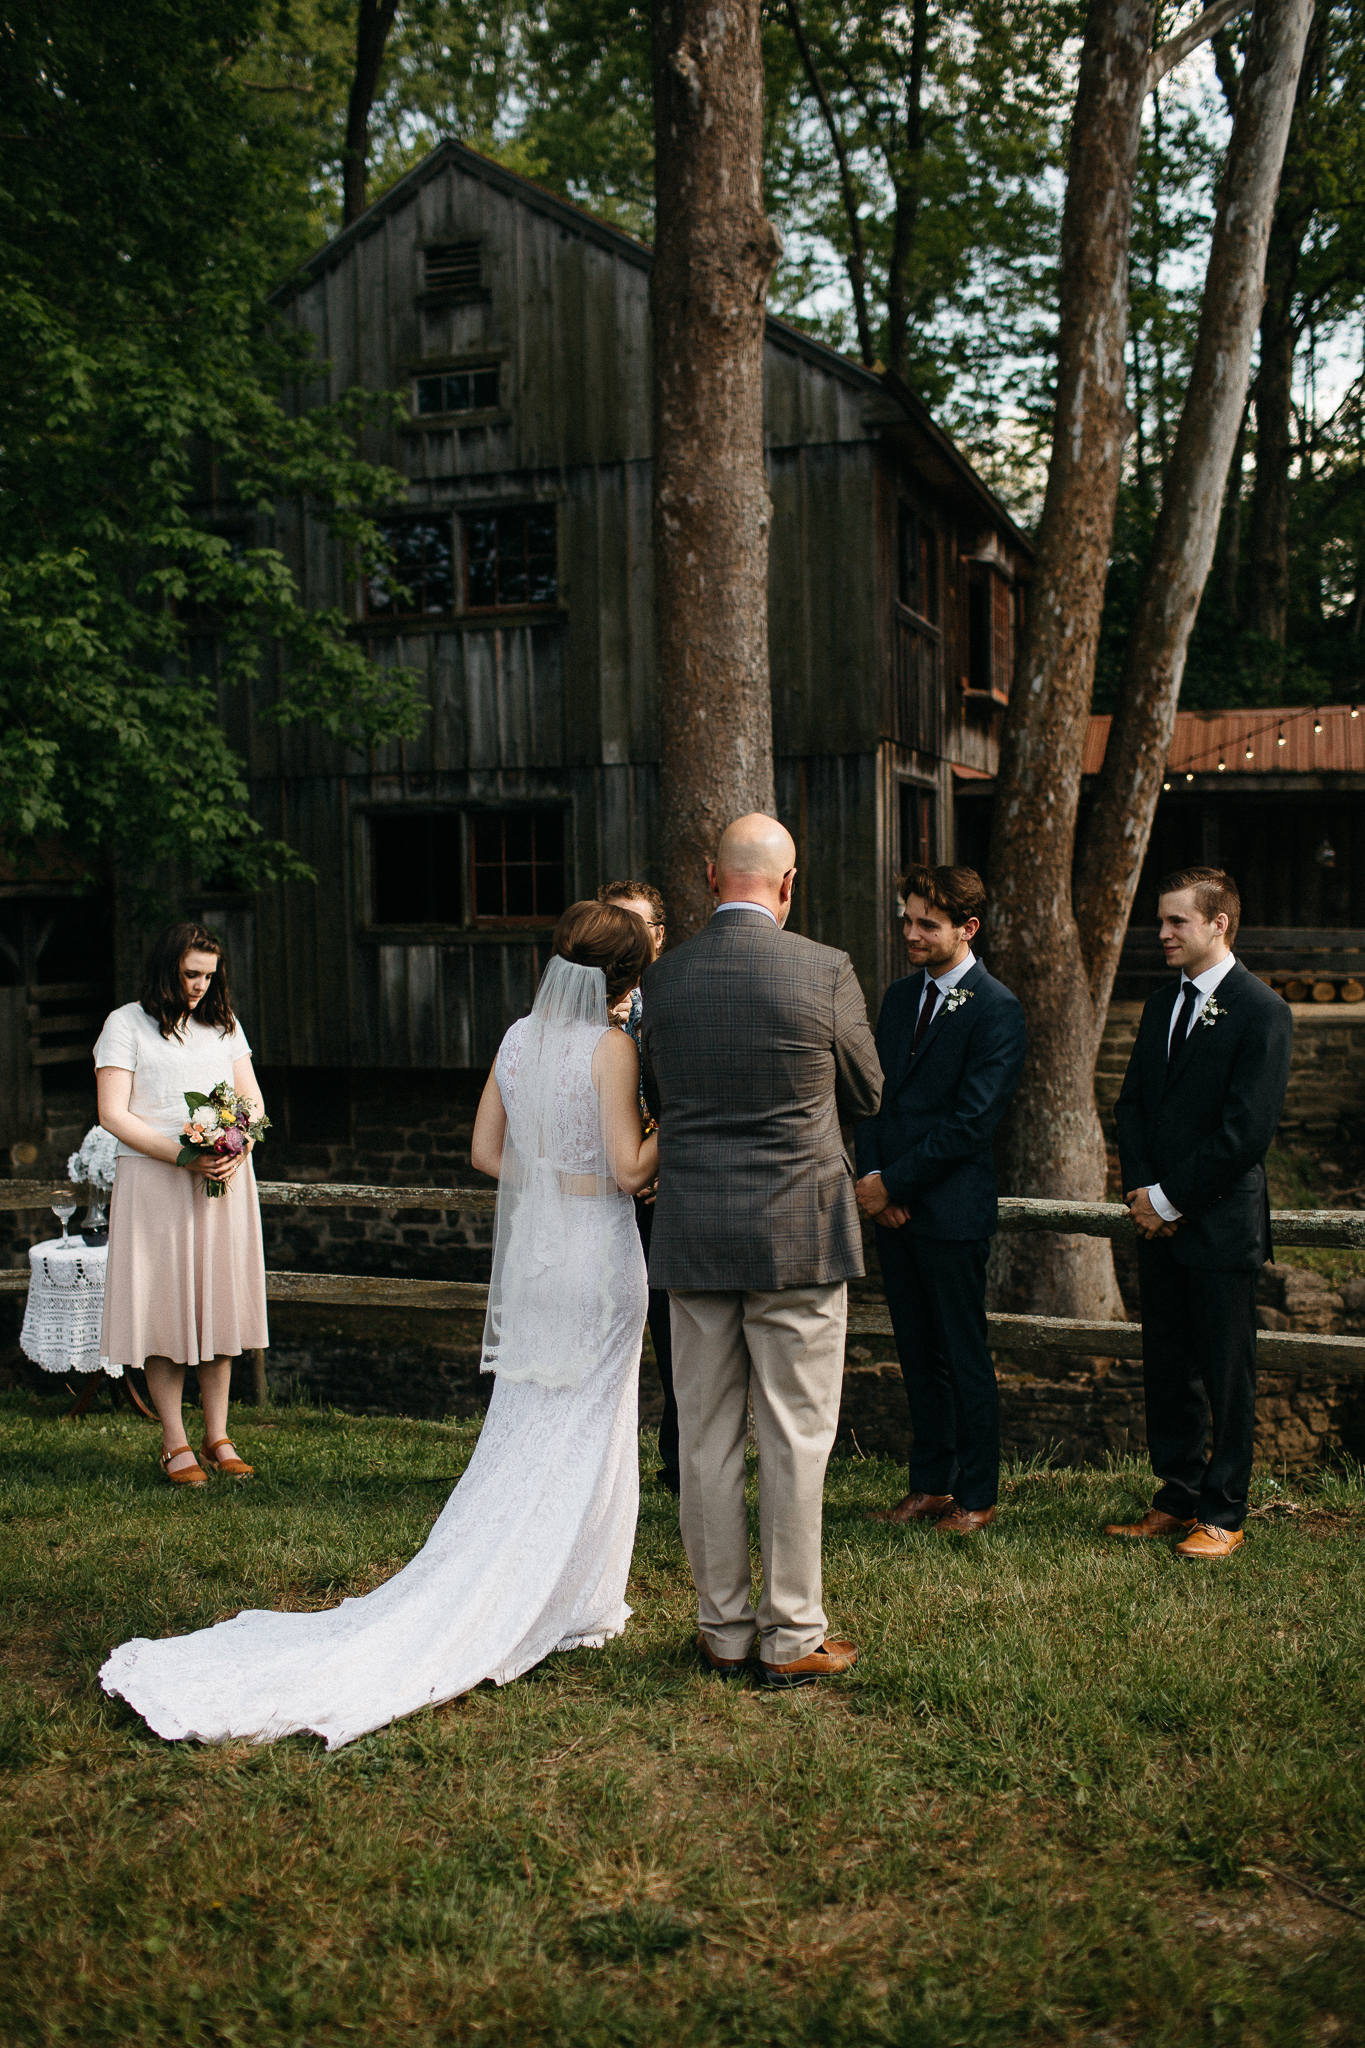 eastlyn bright intimate ohio backyard bohemian forest wedding photographer -53.jpg